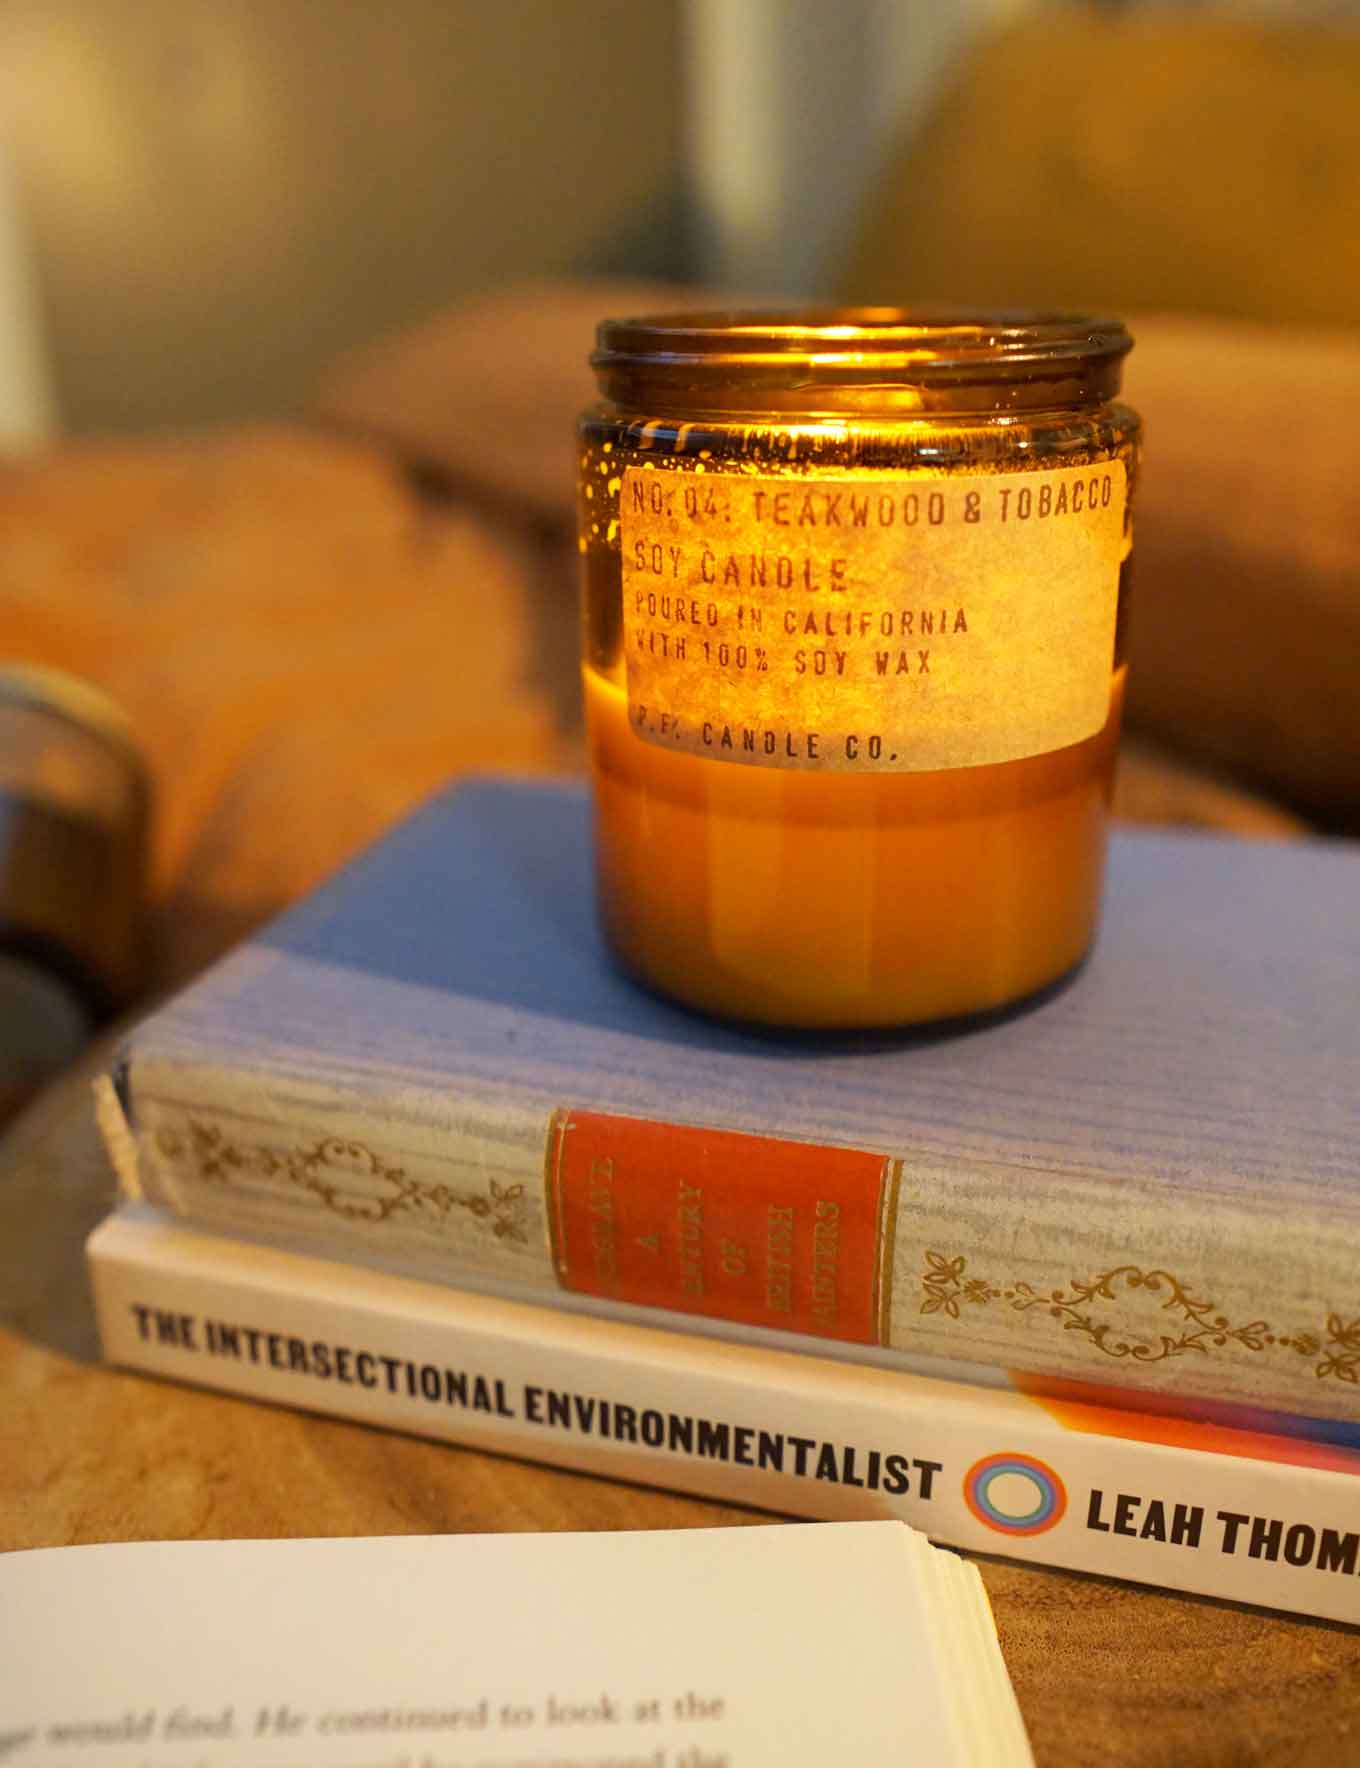 Brandende kaars met een label dat nr. 04 zegt: Teakwood &Tobacco, Soy Candle, Poured in California with 100% soy wax, P.F. Candle Co